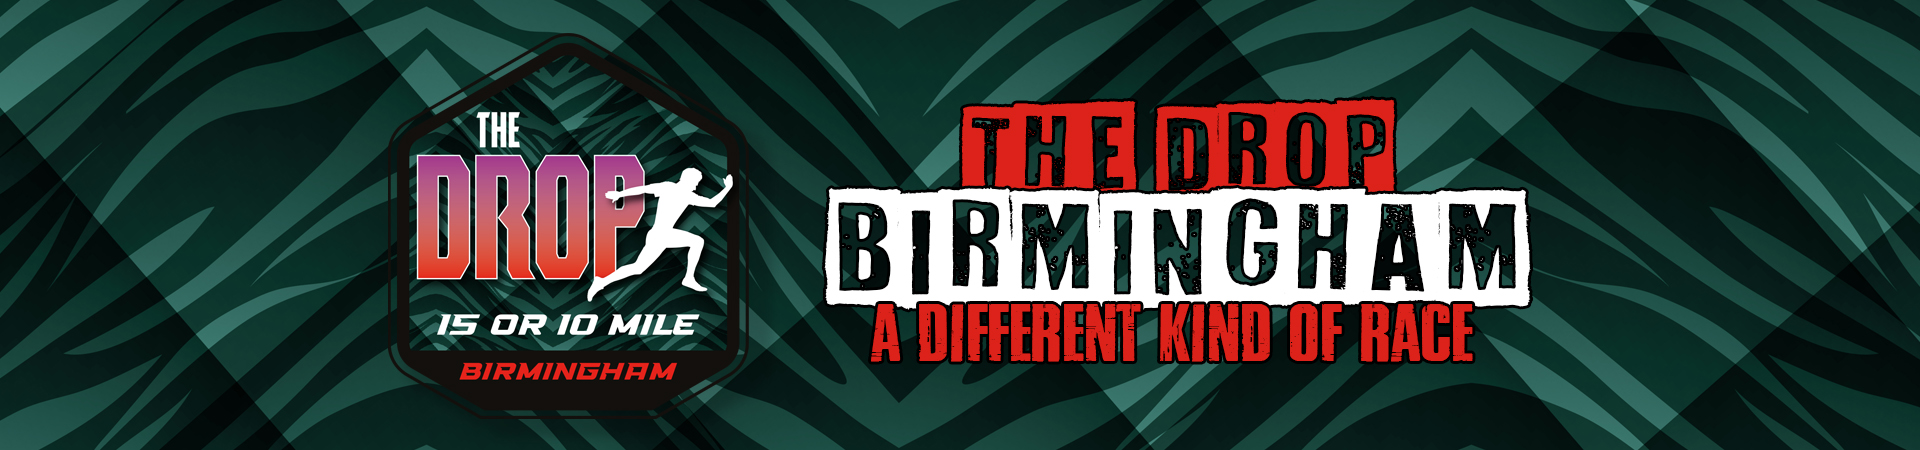 The Drop - Birmingham 